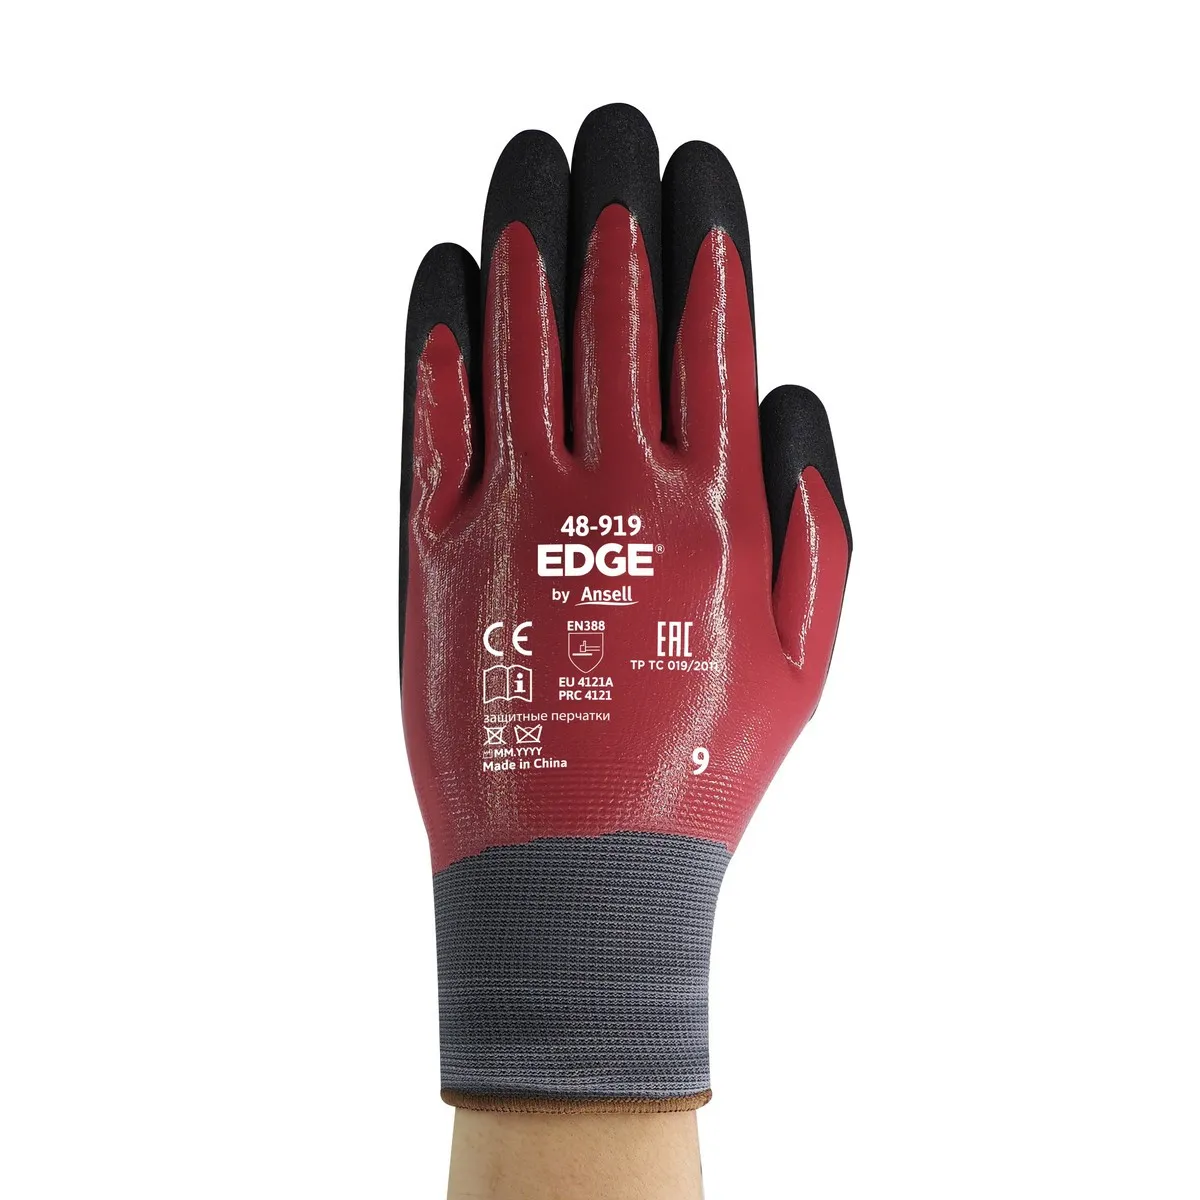 Zaštitne rukavice EDGE 48-919 crveno-crne - Ansell - PAR 